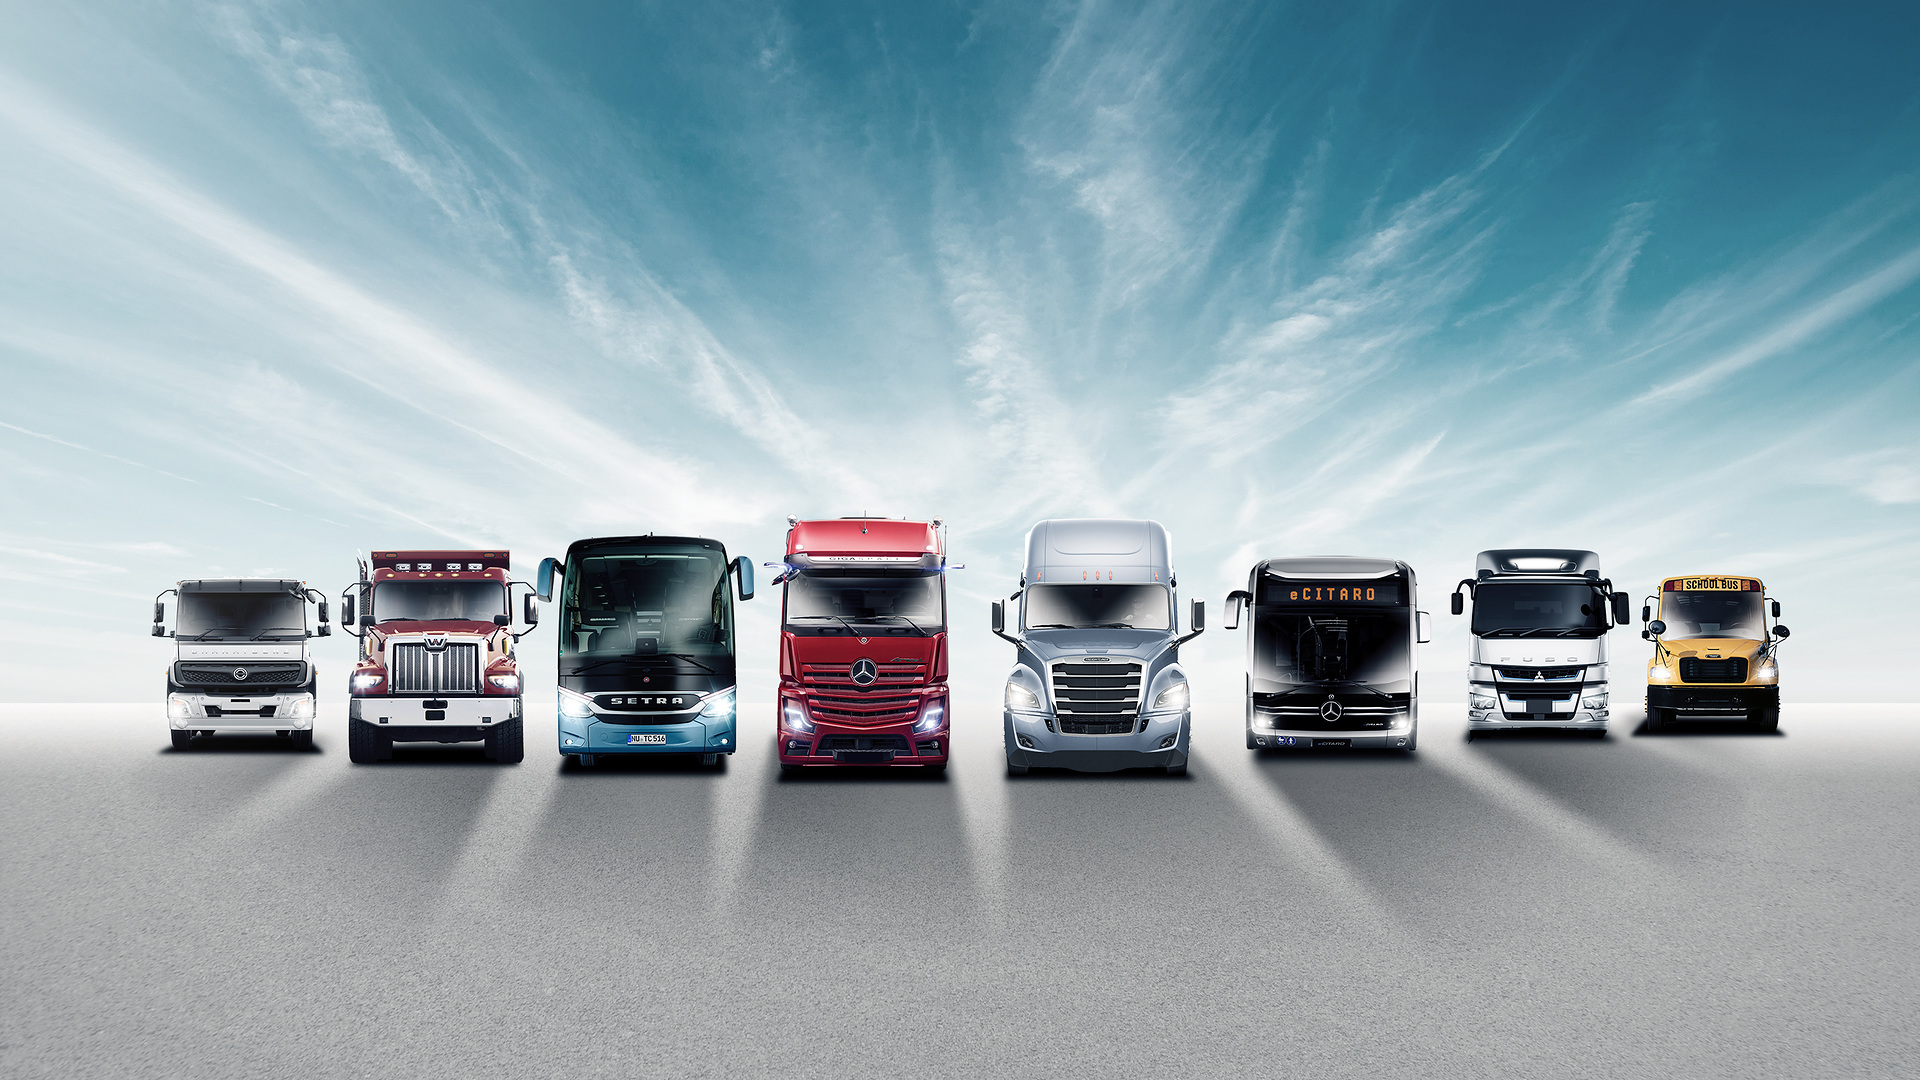 Daimler Truck erzielt erwartet starke Absatzzahlen in 2022